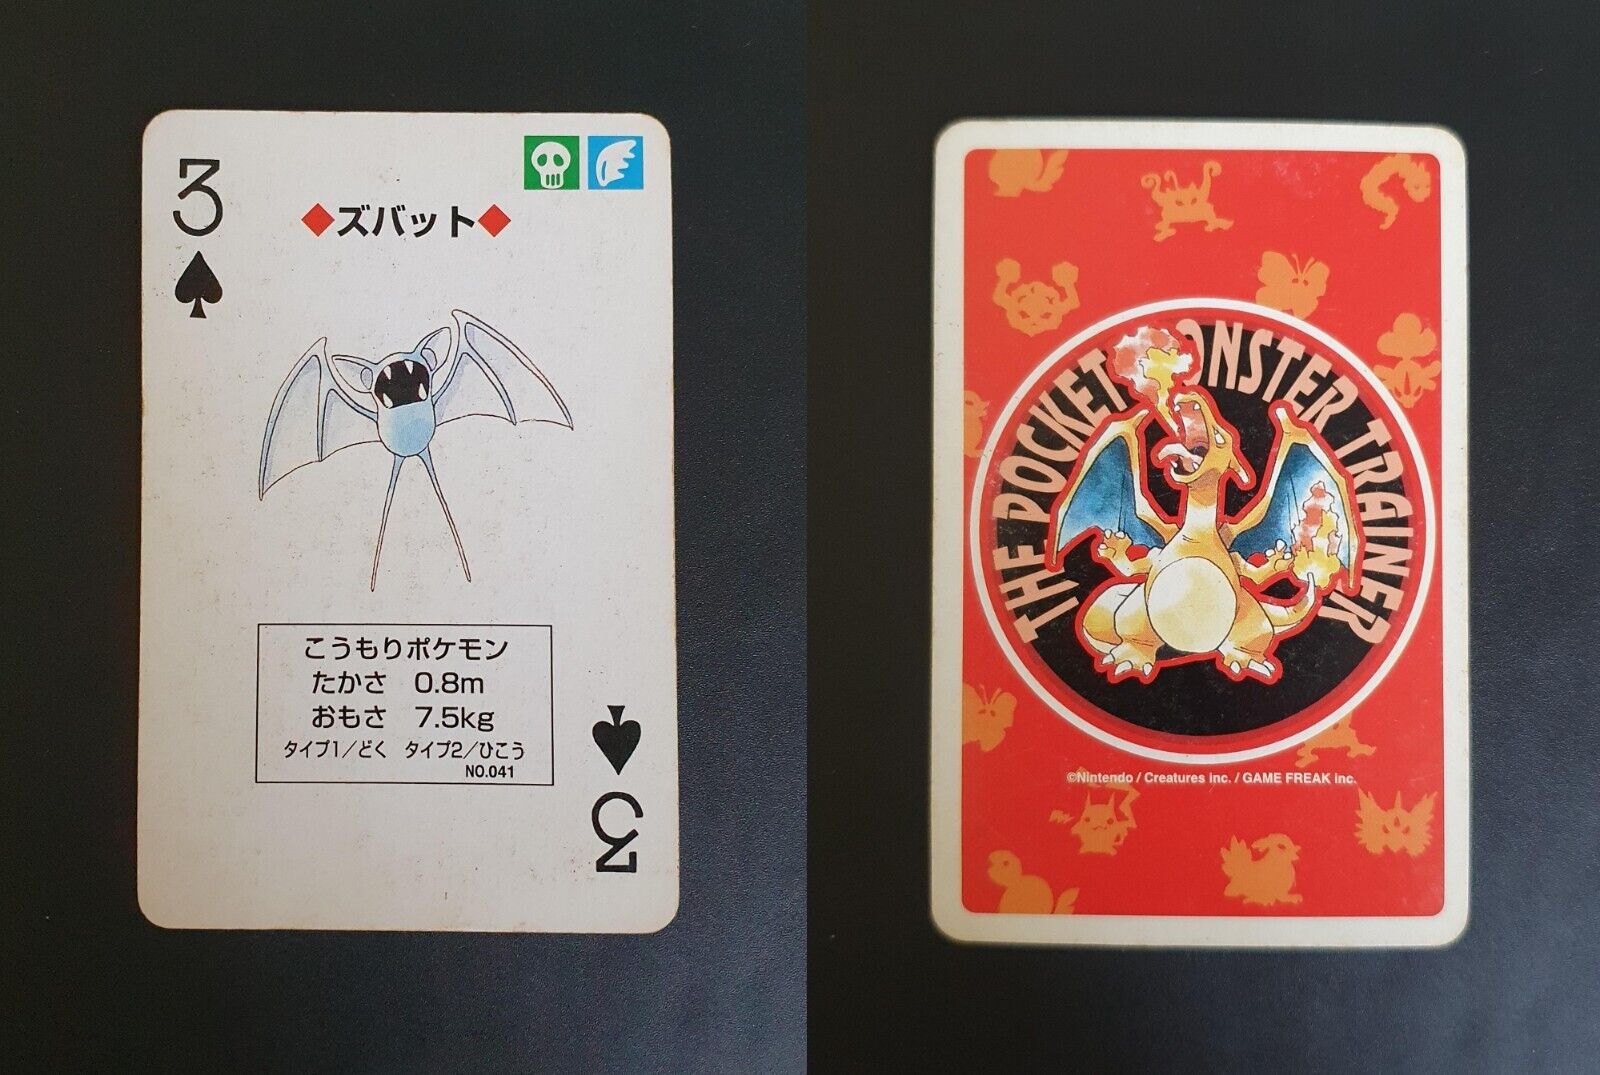 Rare 1996 Japanese Pokemon Poker ZUBAT No.041 Charizard Deck Playing Card